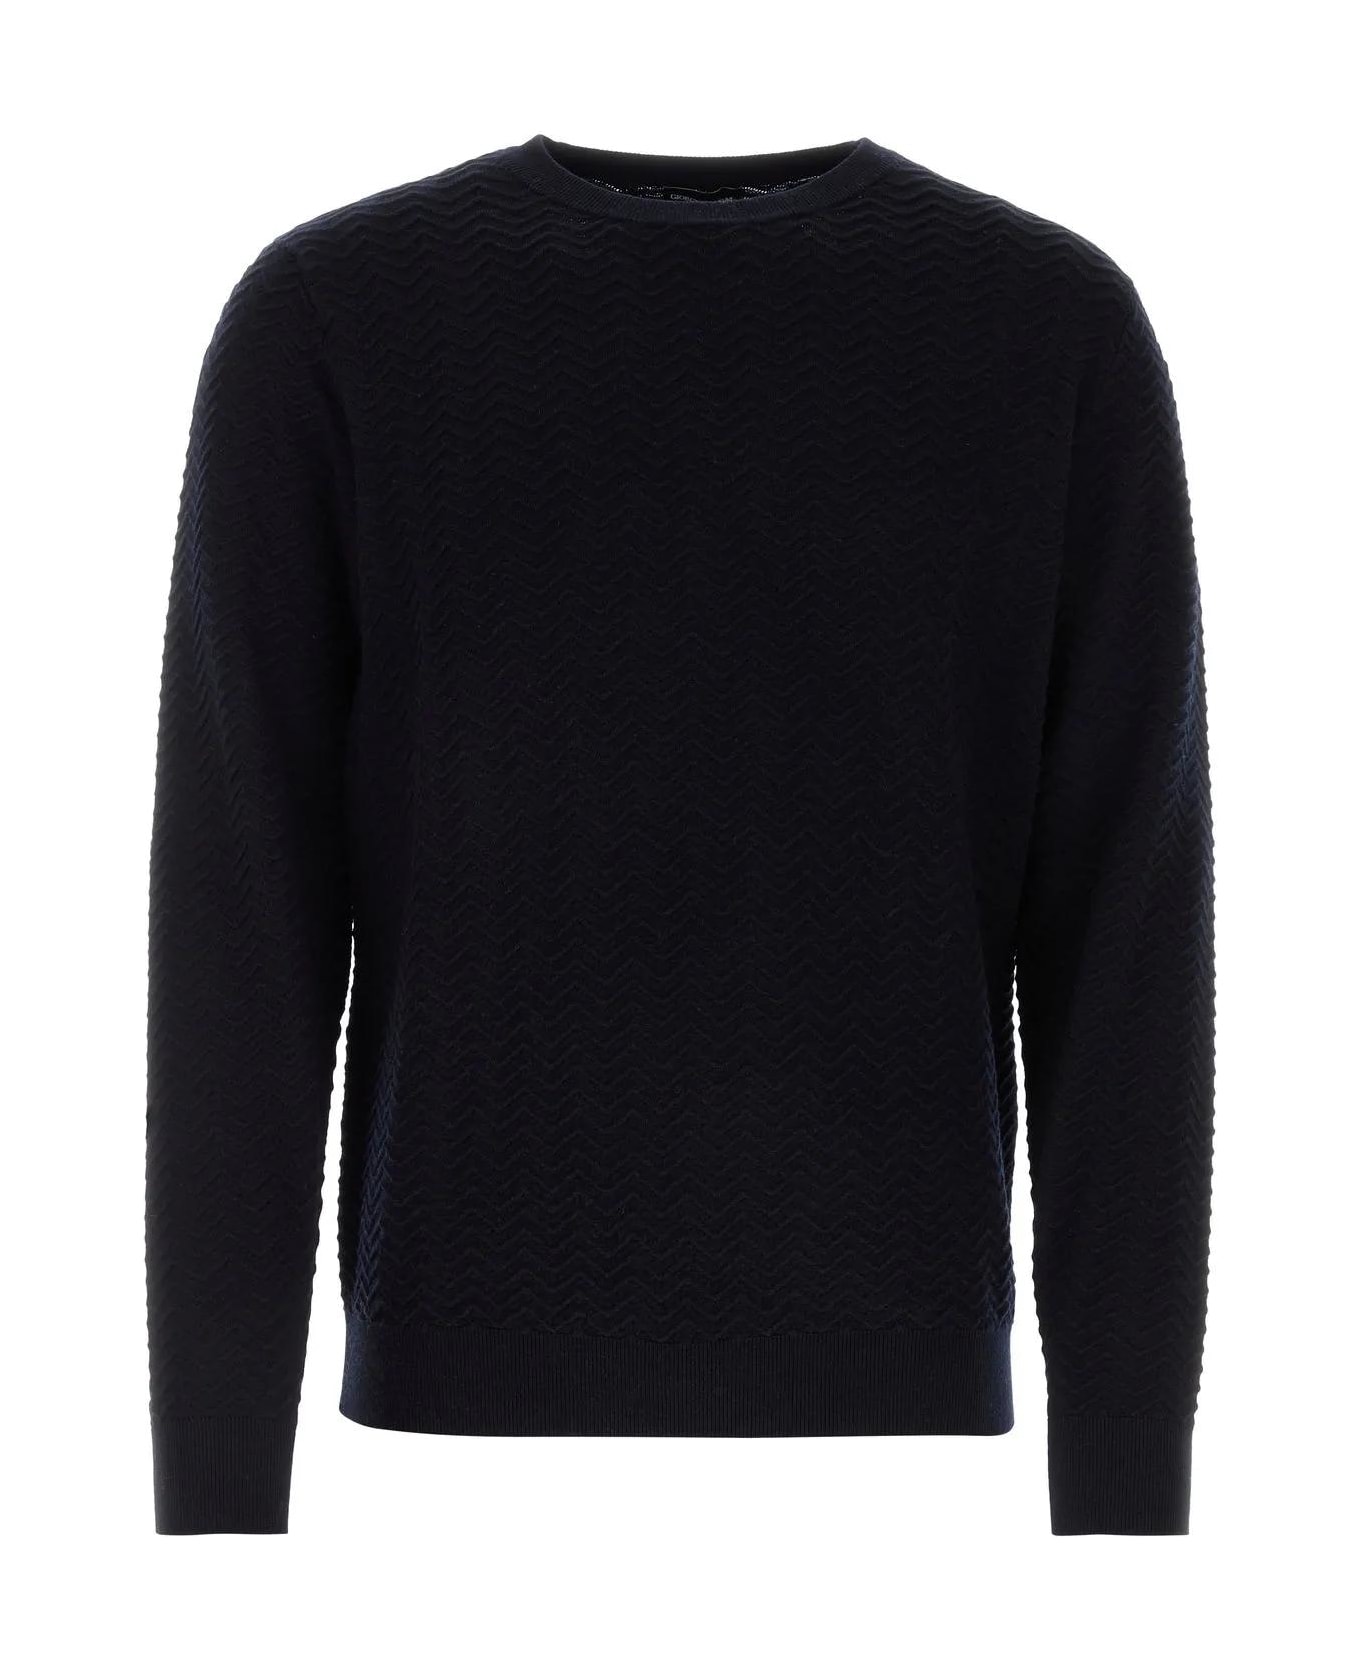 Giorgio Armani Midnight Blue Wool Blend Sweater - NAVY